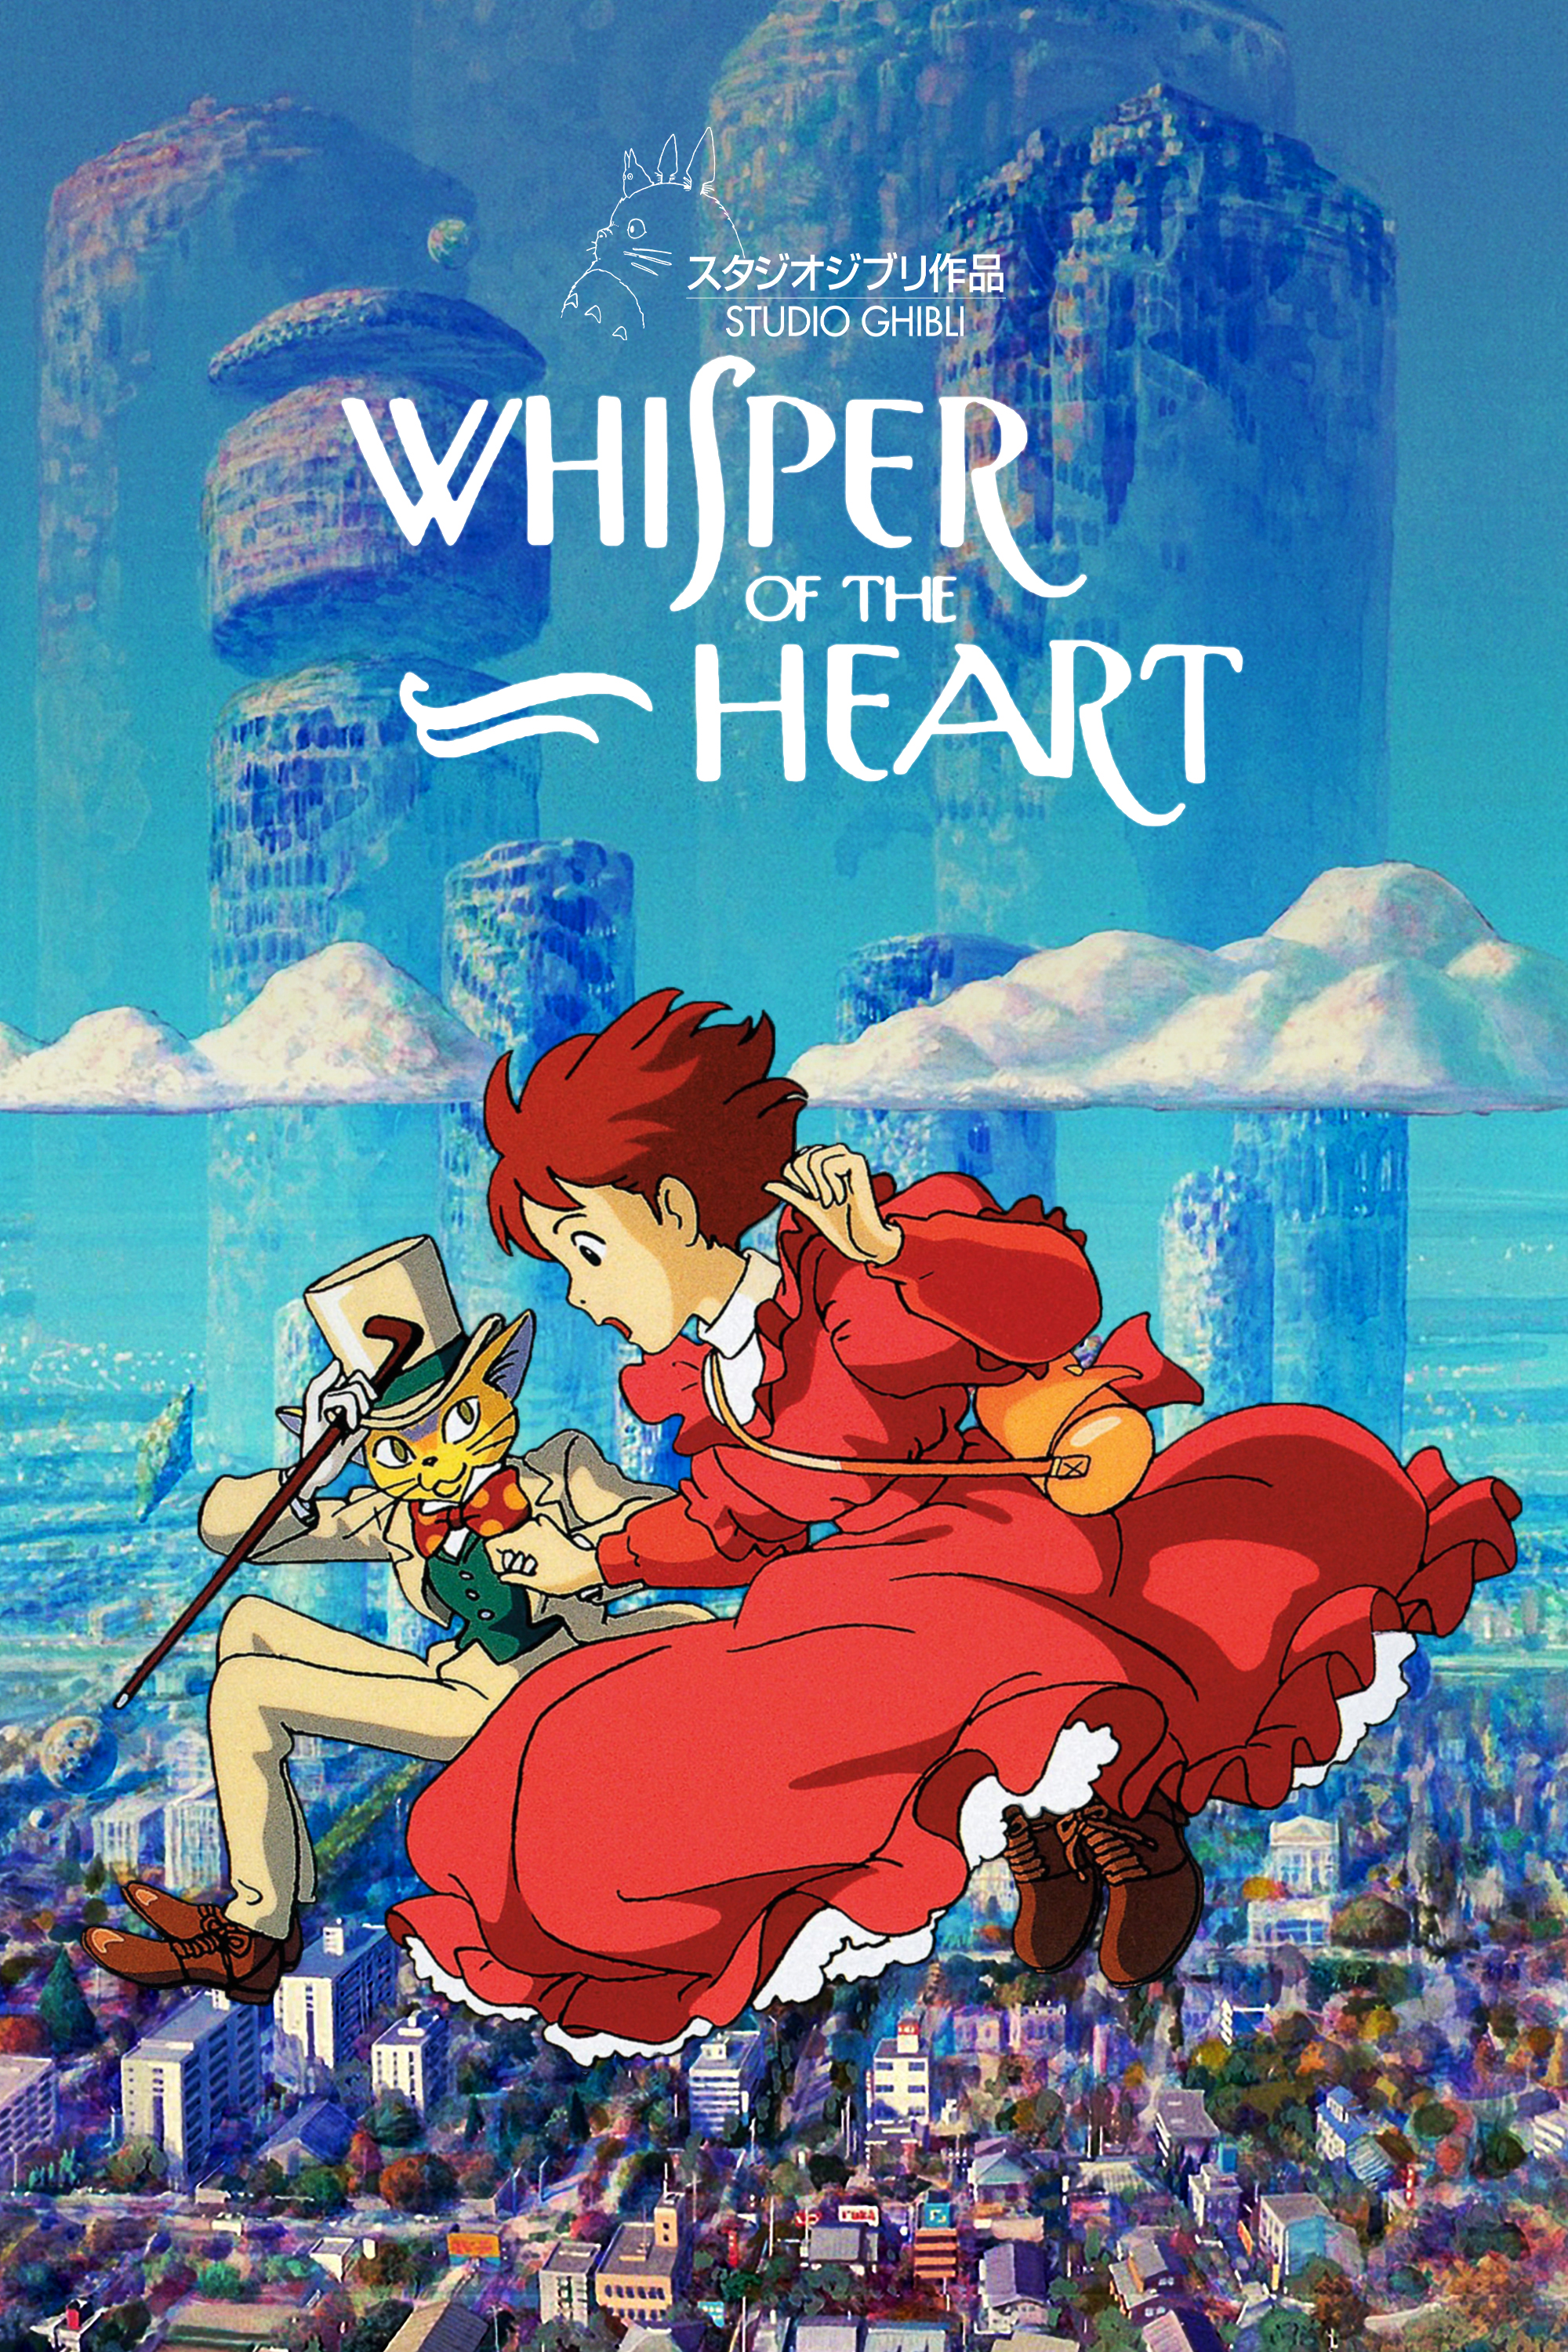 Whisper of the Heart - Wikipedia